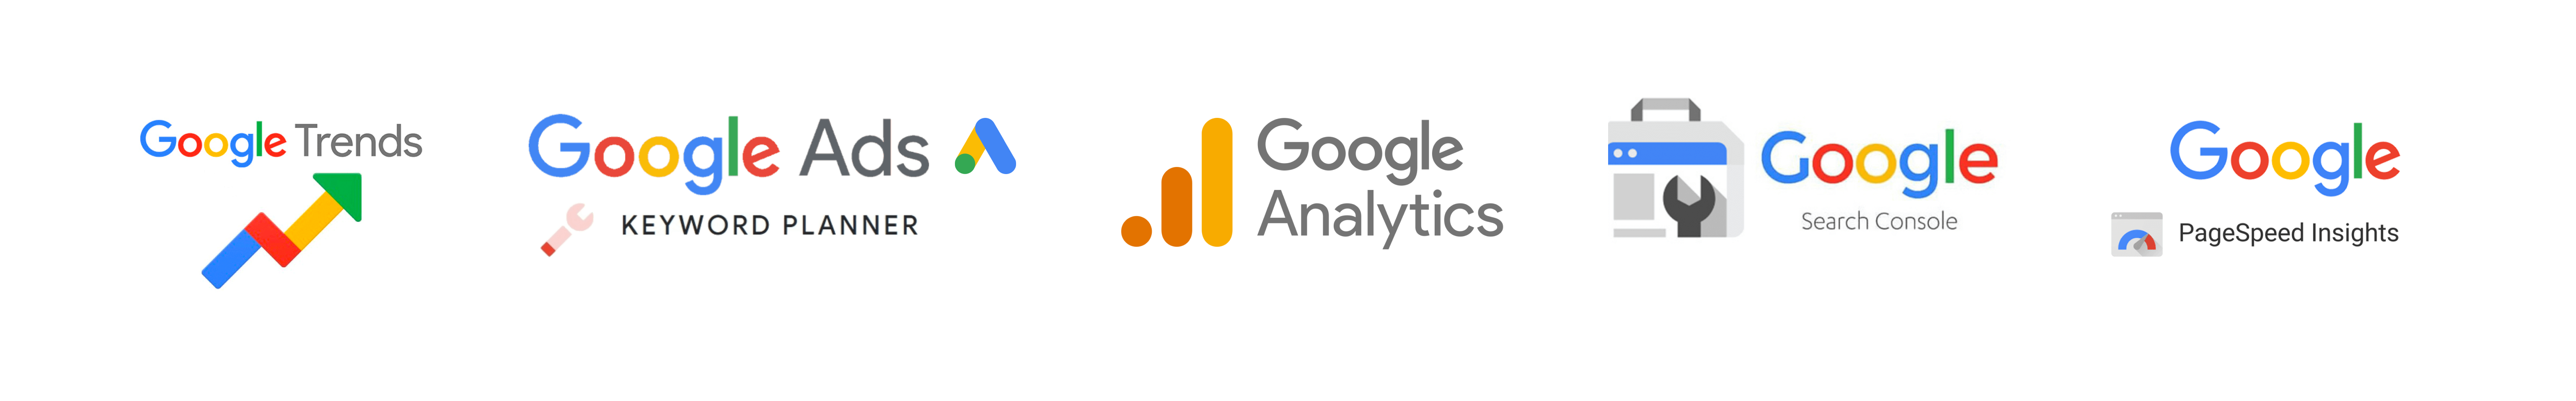 Logos de Google: Google Trends, Google Ads, Google Analytics, Google Search Console, Google PageSpeed Insights